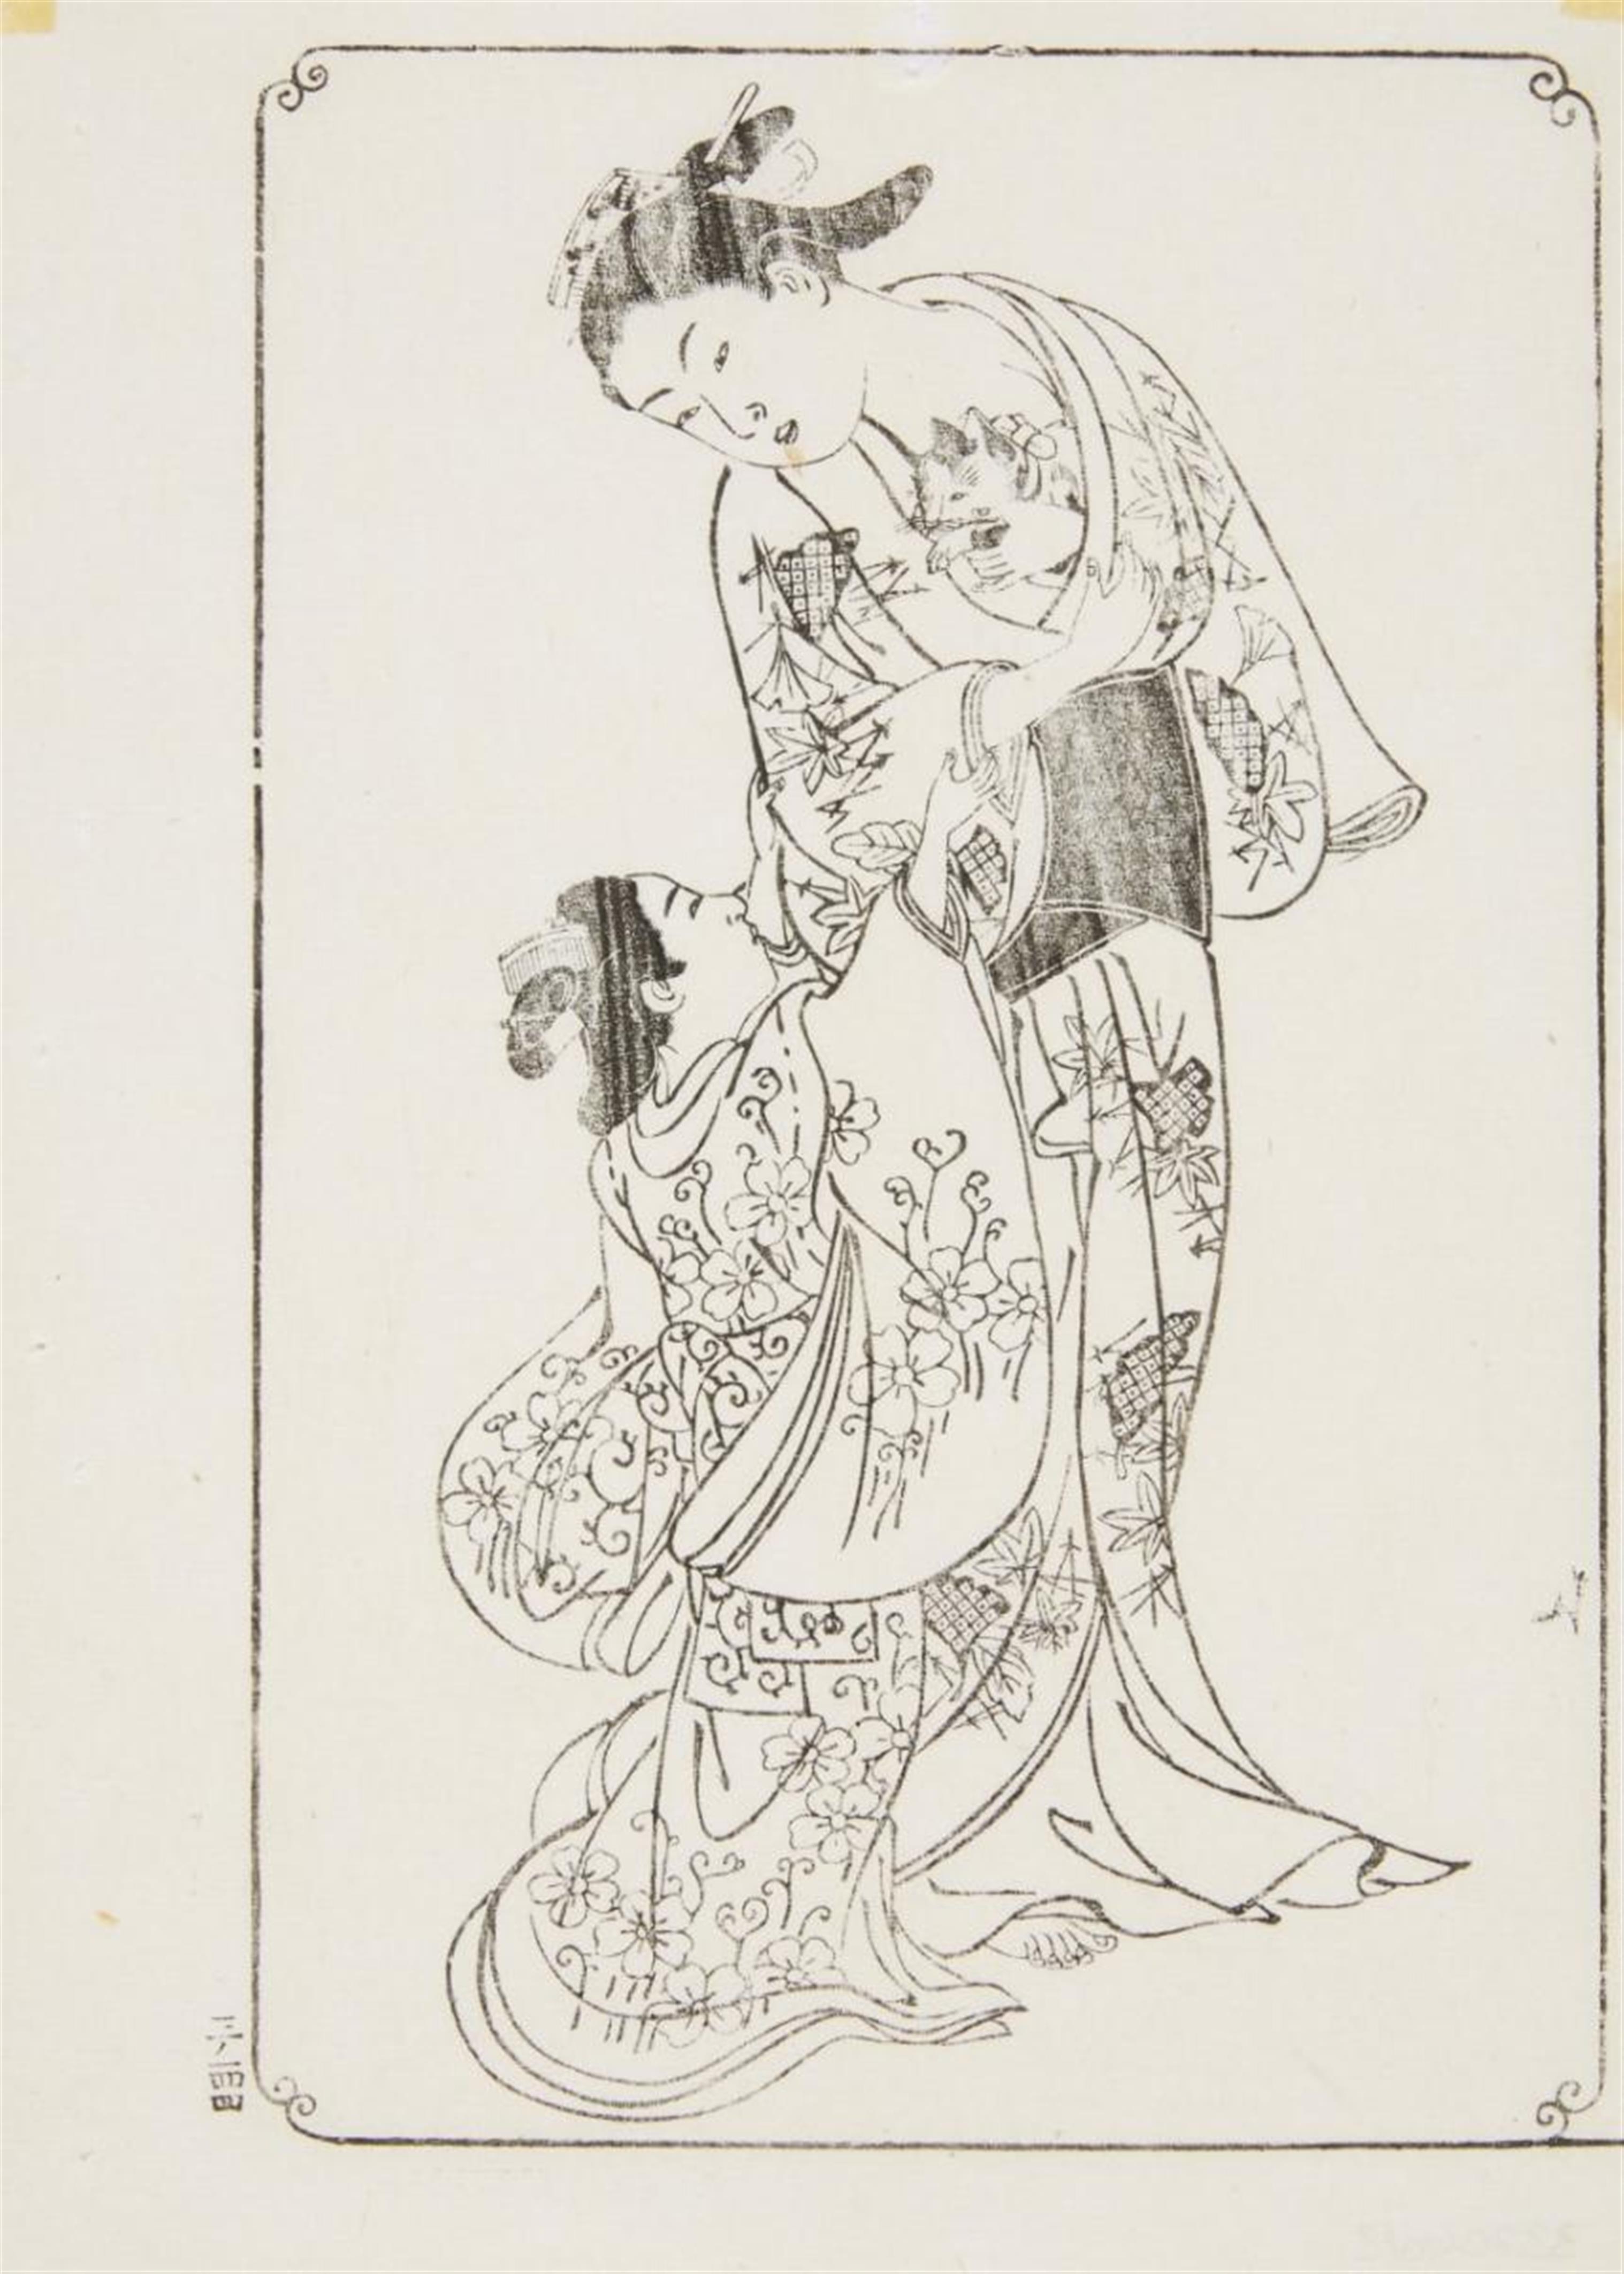 Sukenobu Nishikawa
other artists - Nishikawa Sukenobu (1671-1751) and other artists of the 18th century - image-10